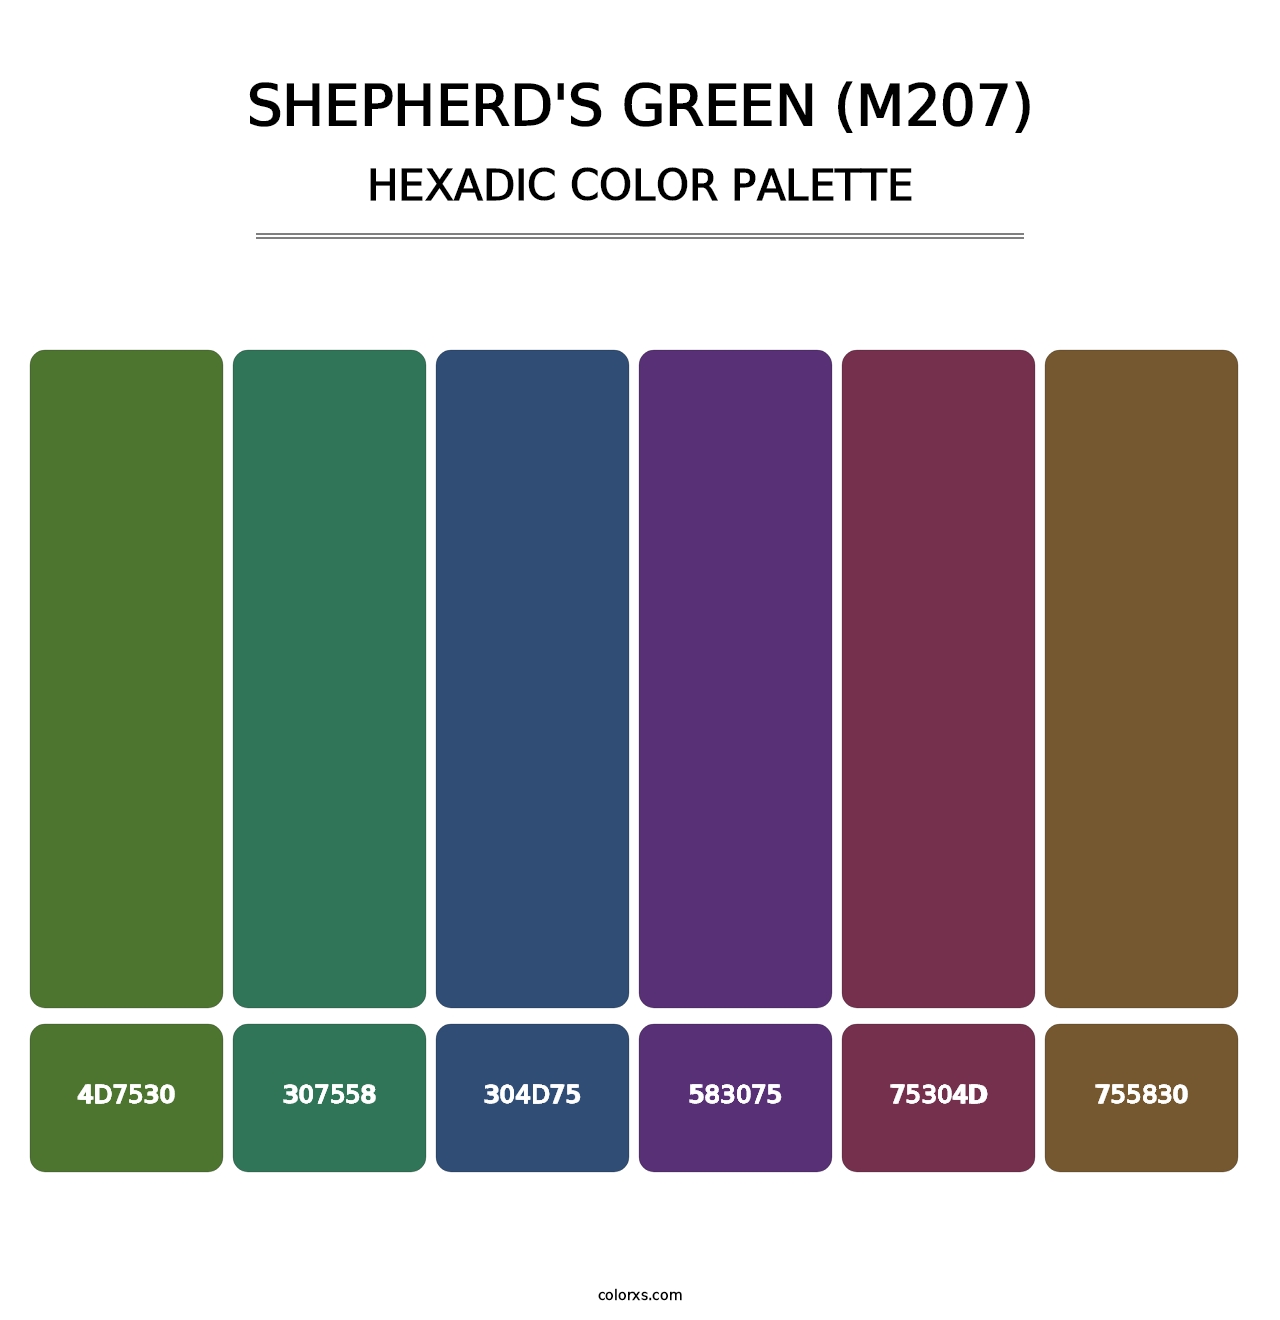 Shepherd's Green (M207) - Hexadic Color Palette